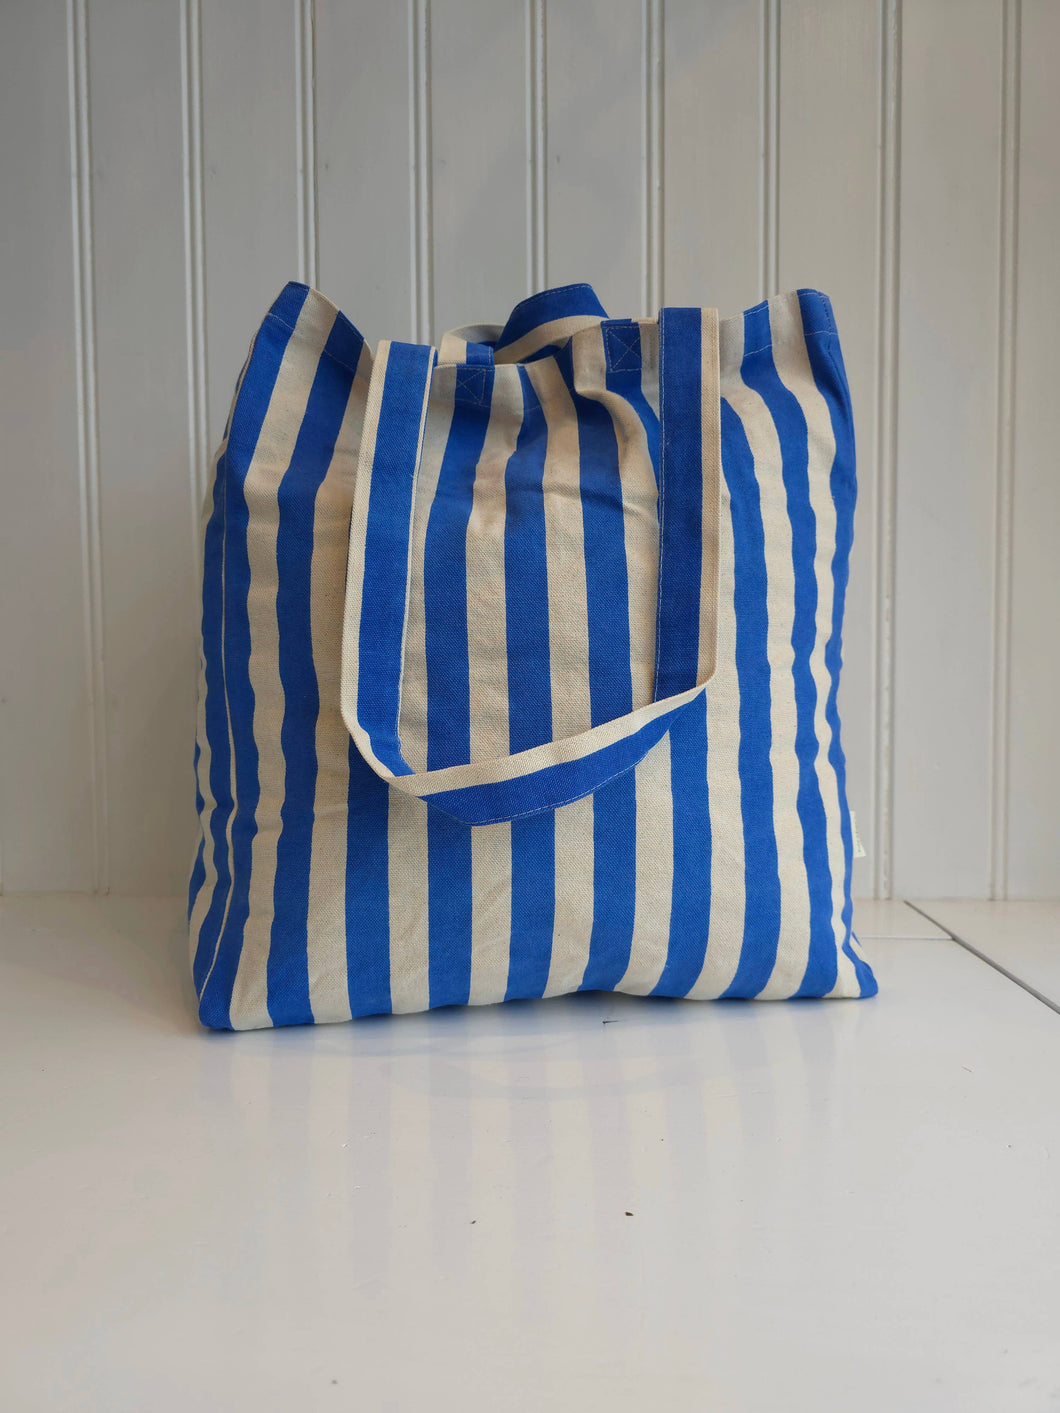 Striped Tote Bag Original: Blue